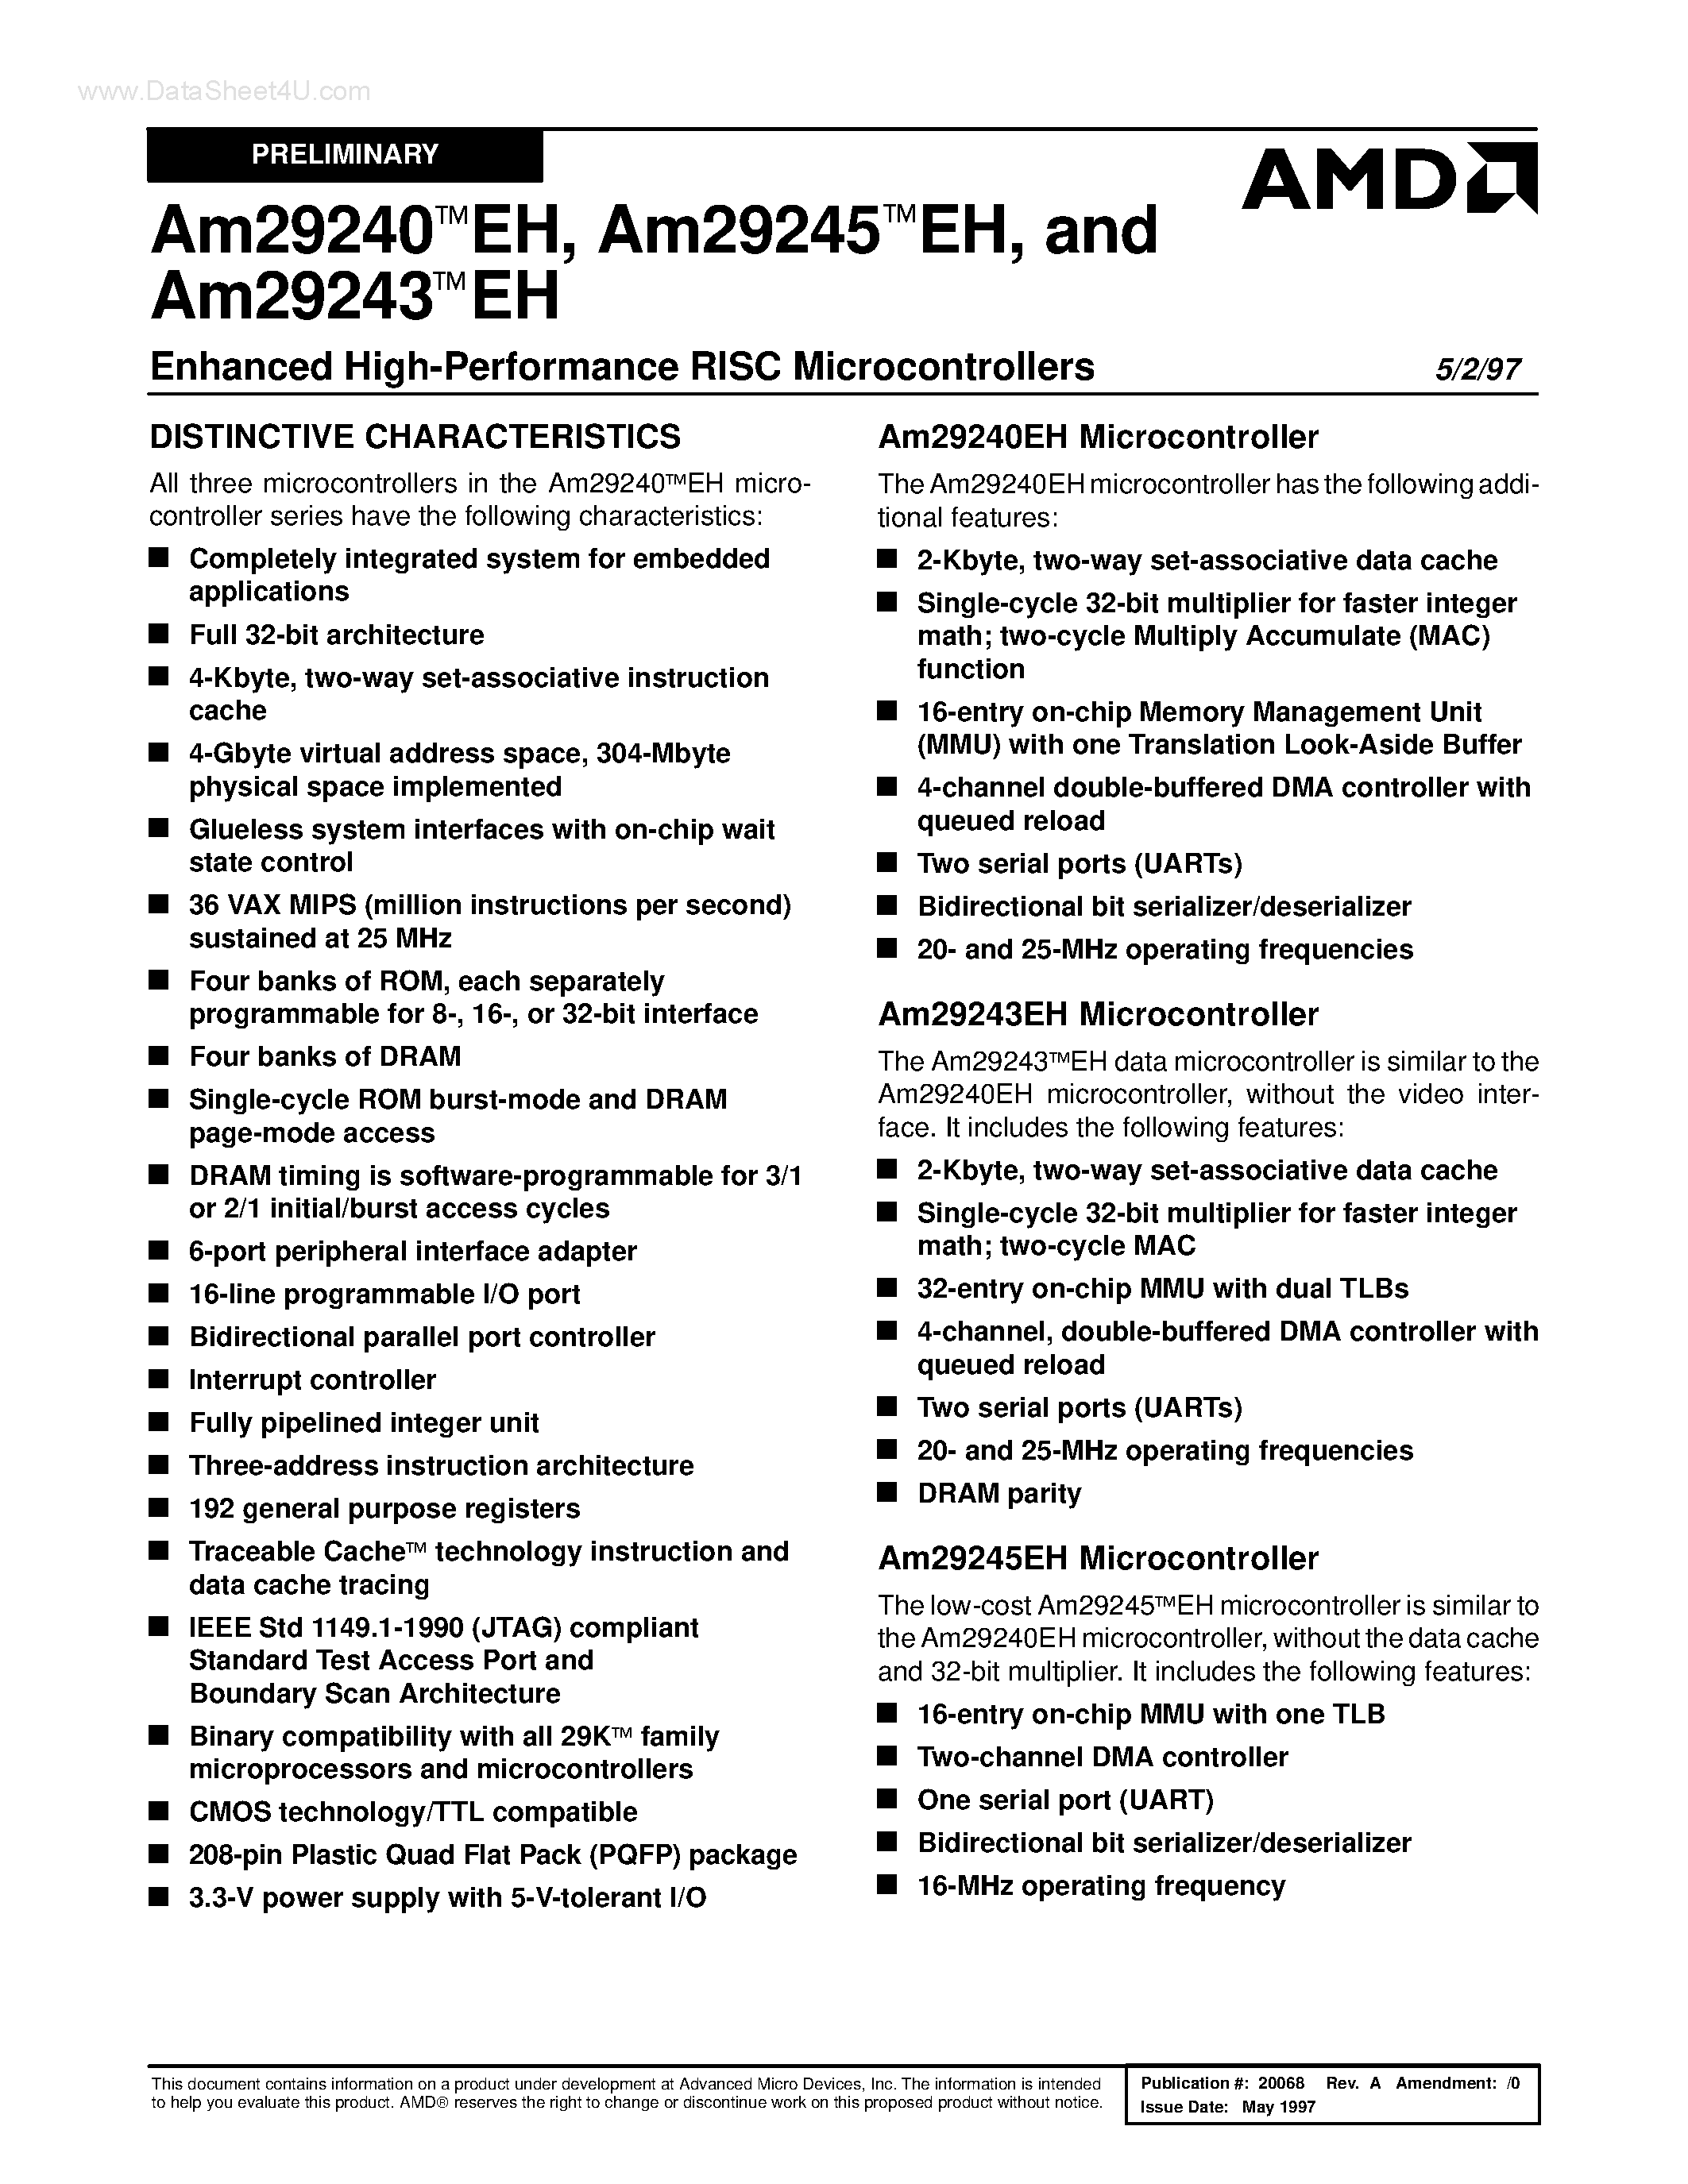 Даташит AM29240EH - (AM29240EH / AM29243EH) Enhanced High-Performance RISC Microcontrollers страница 1